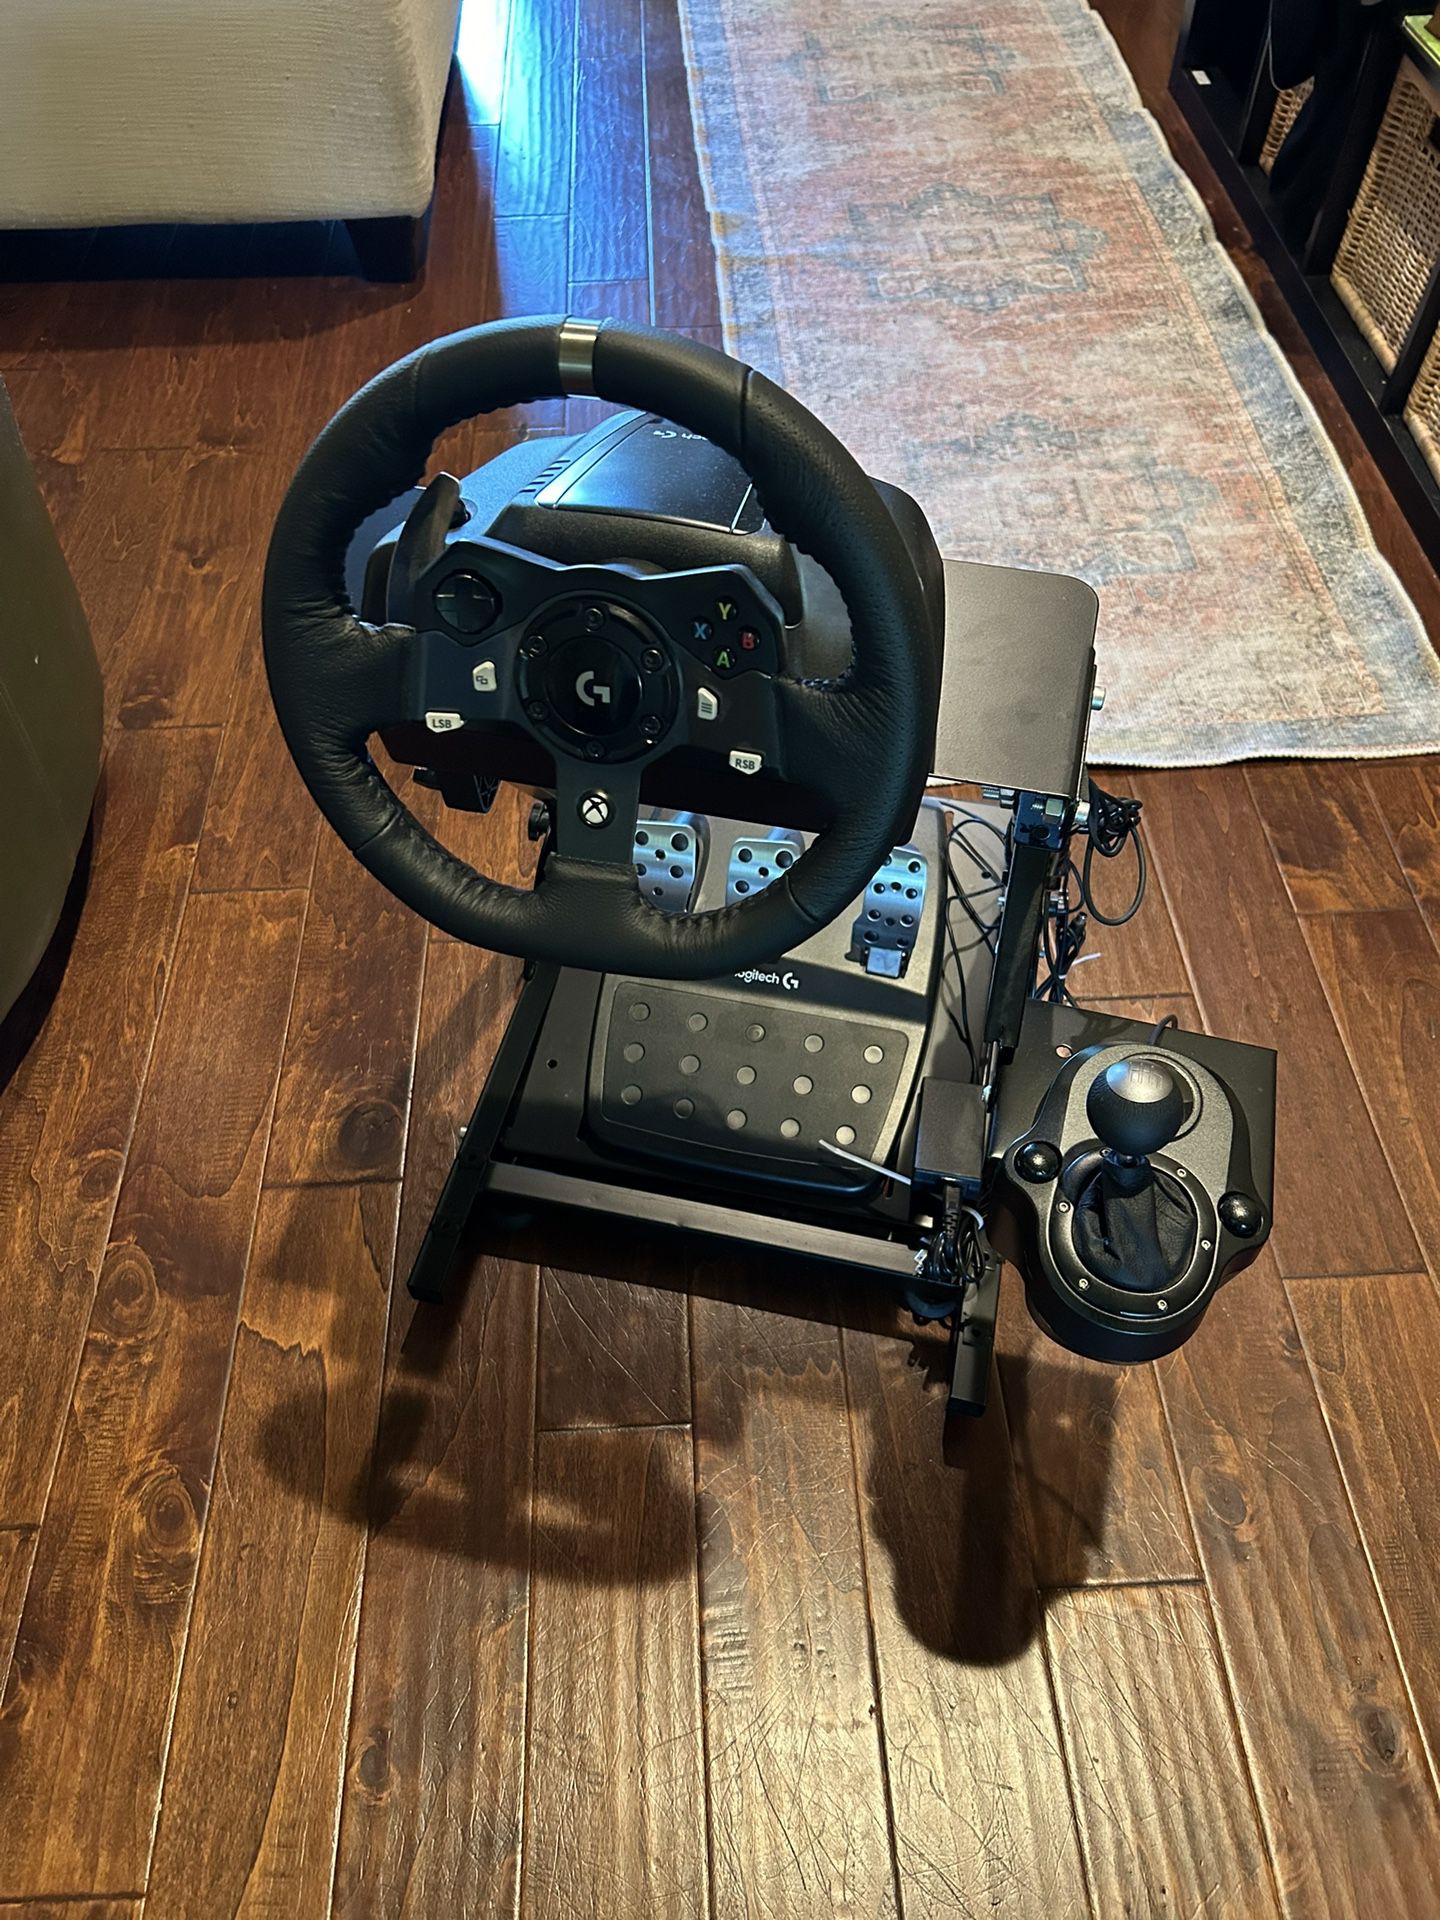 Logitech G920 Racing Wheel Setup